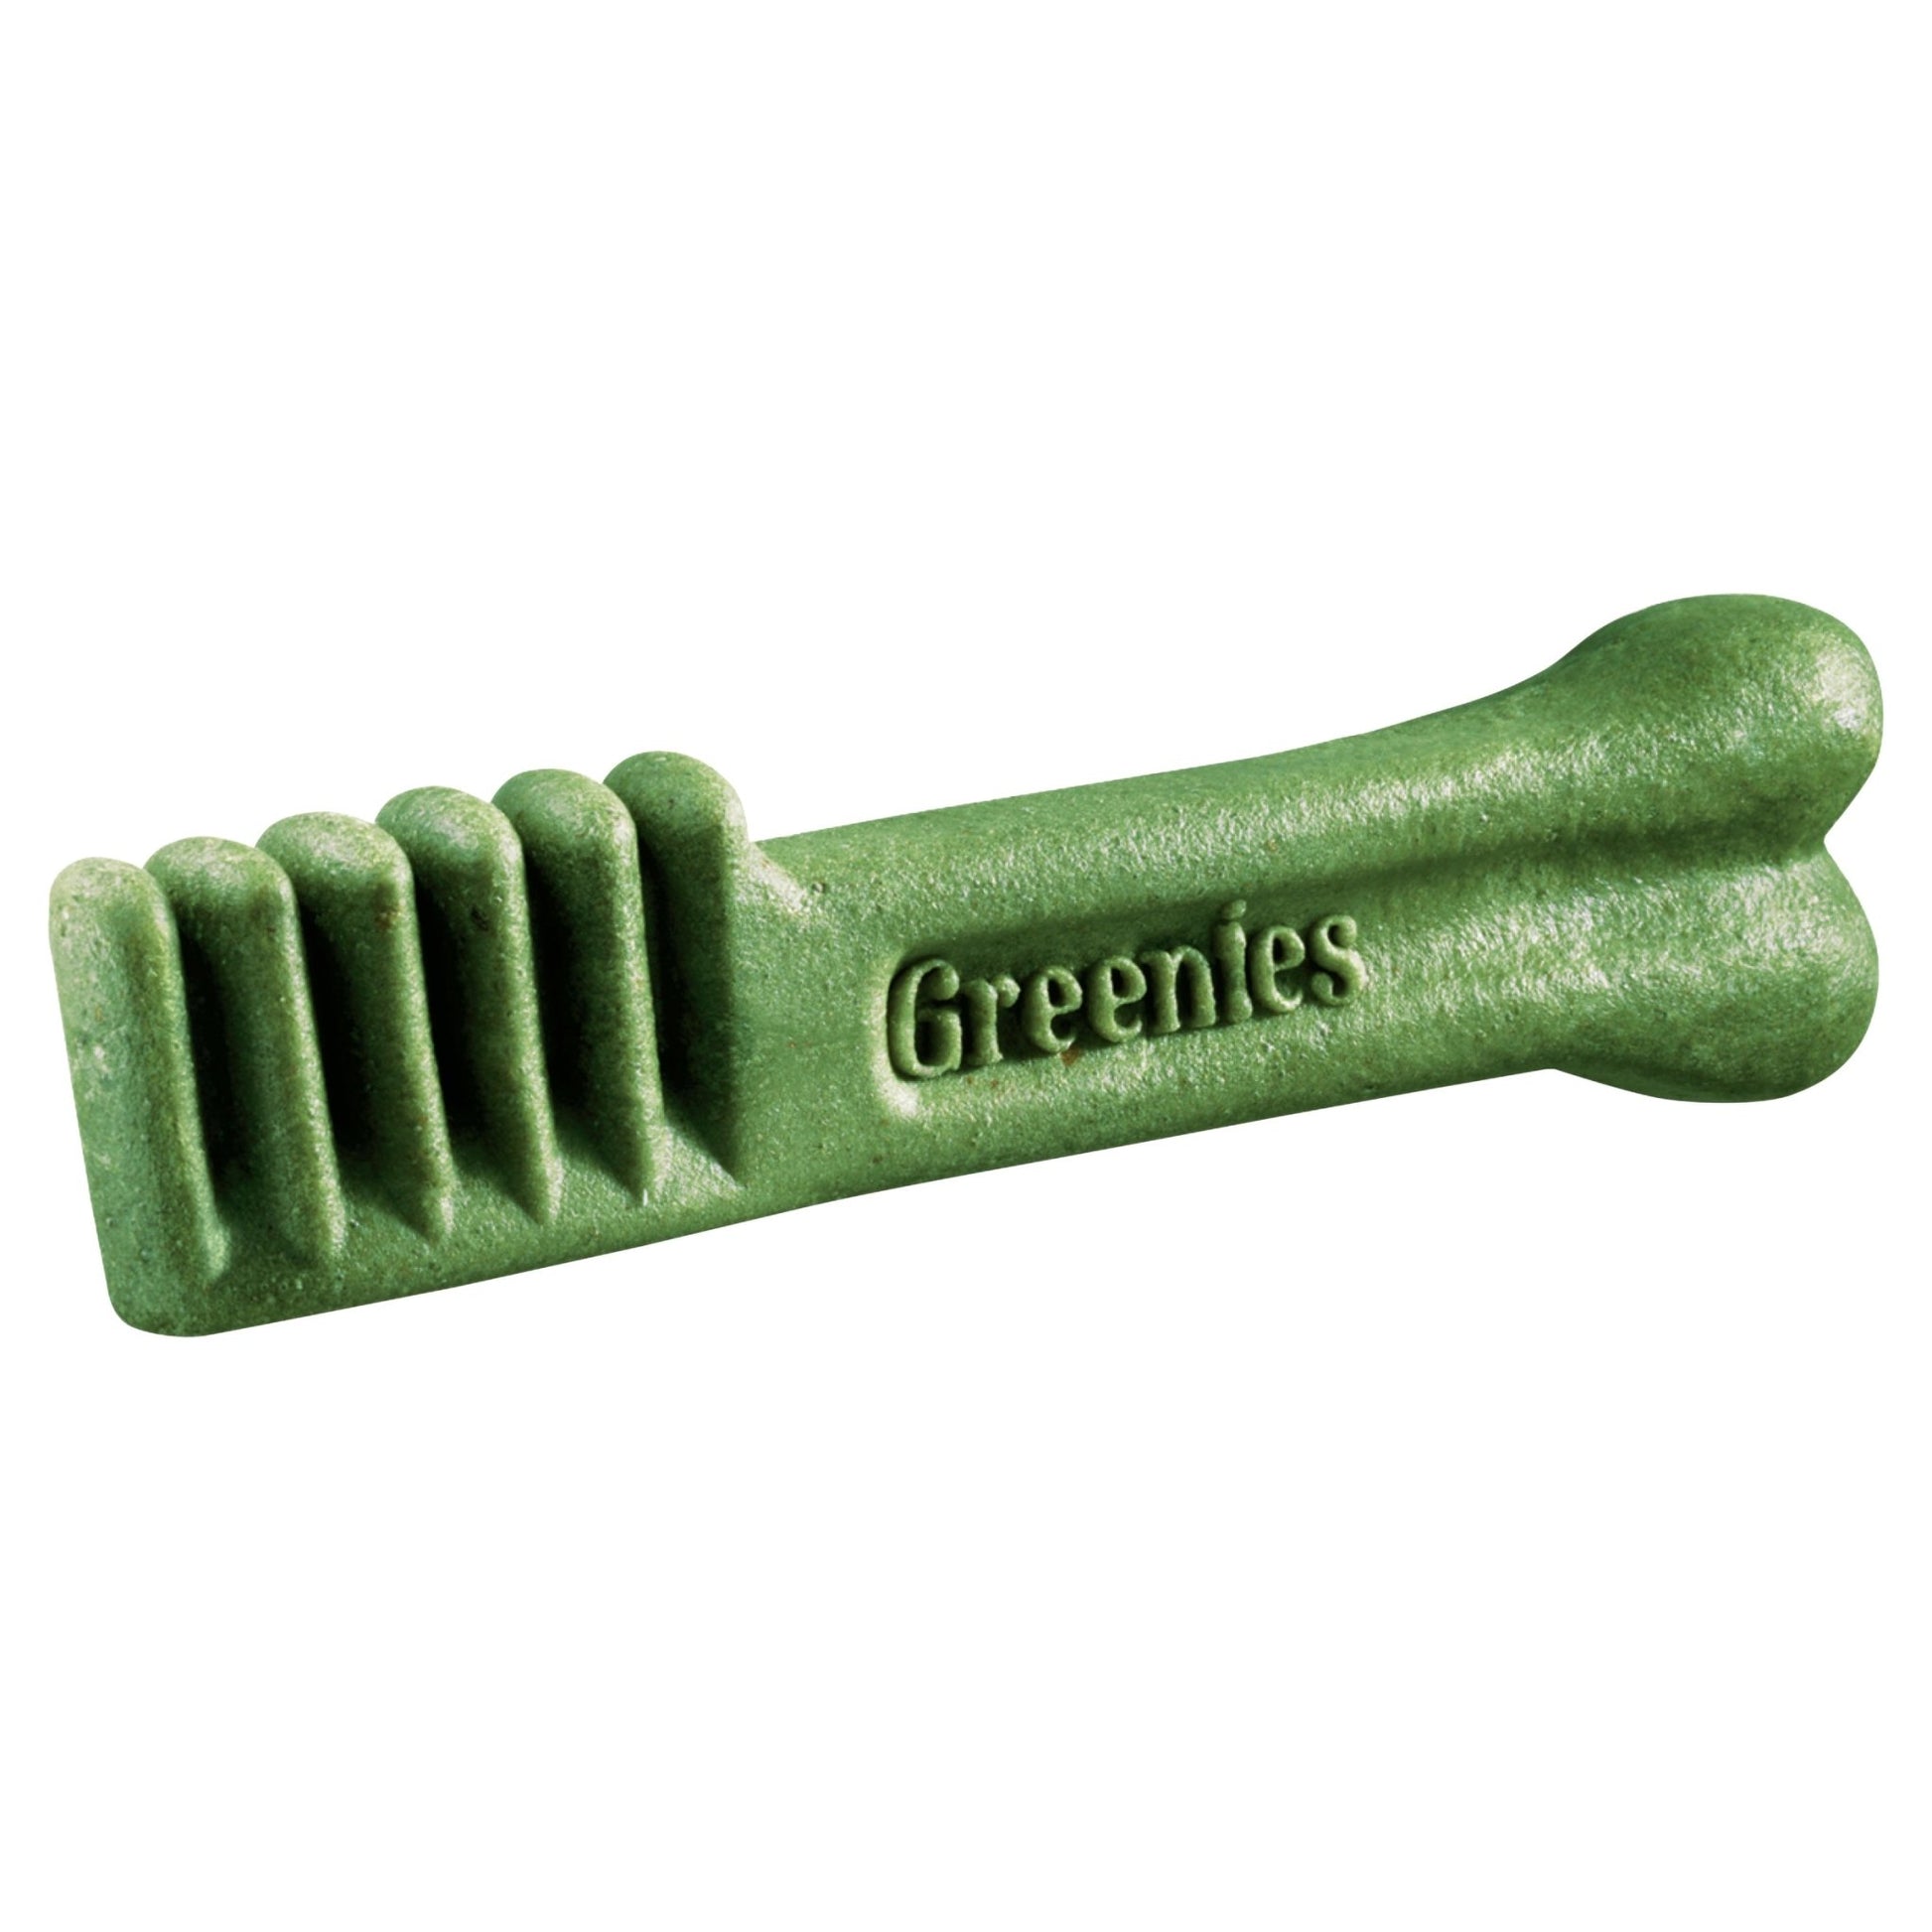 Greenies Original Petite 340g - Woonona Petfood & Produce